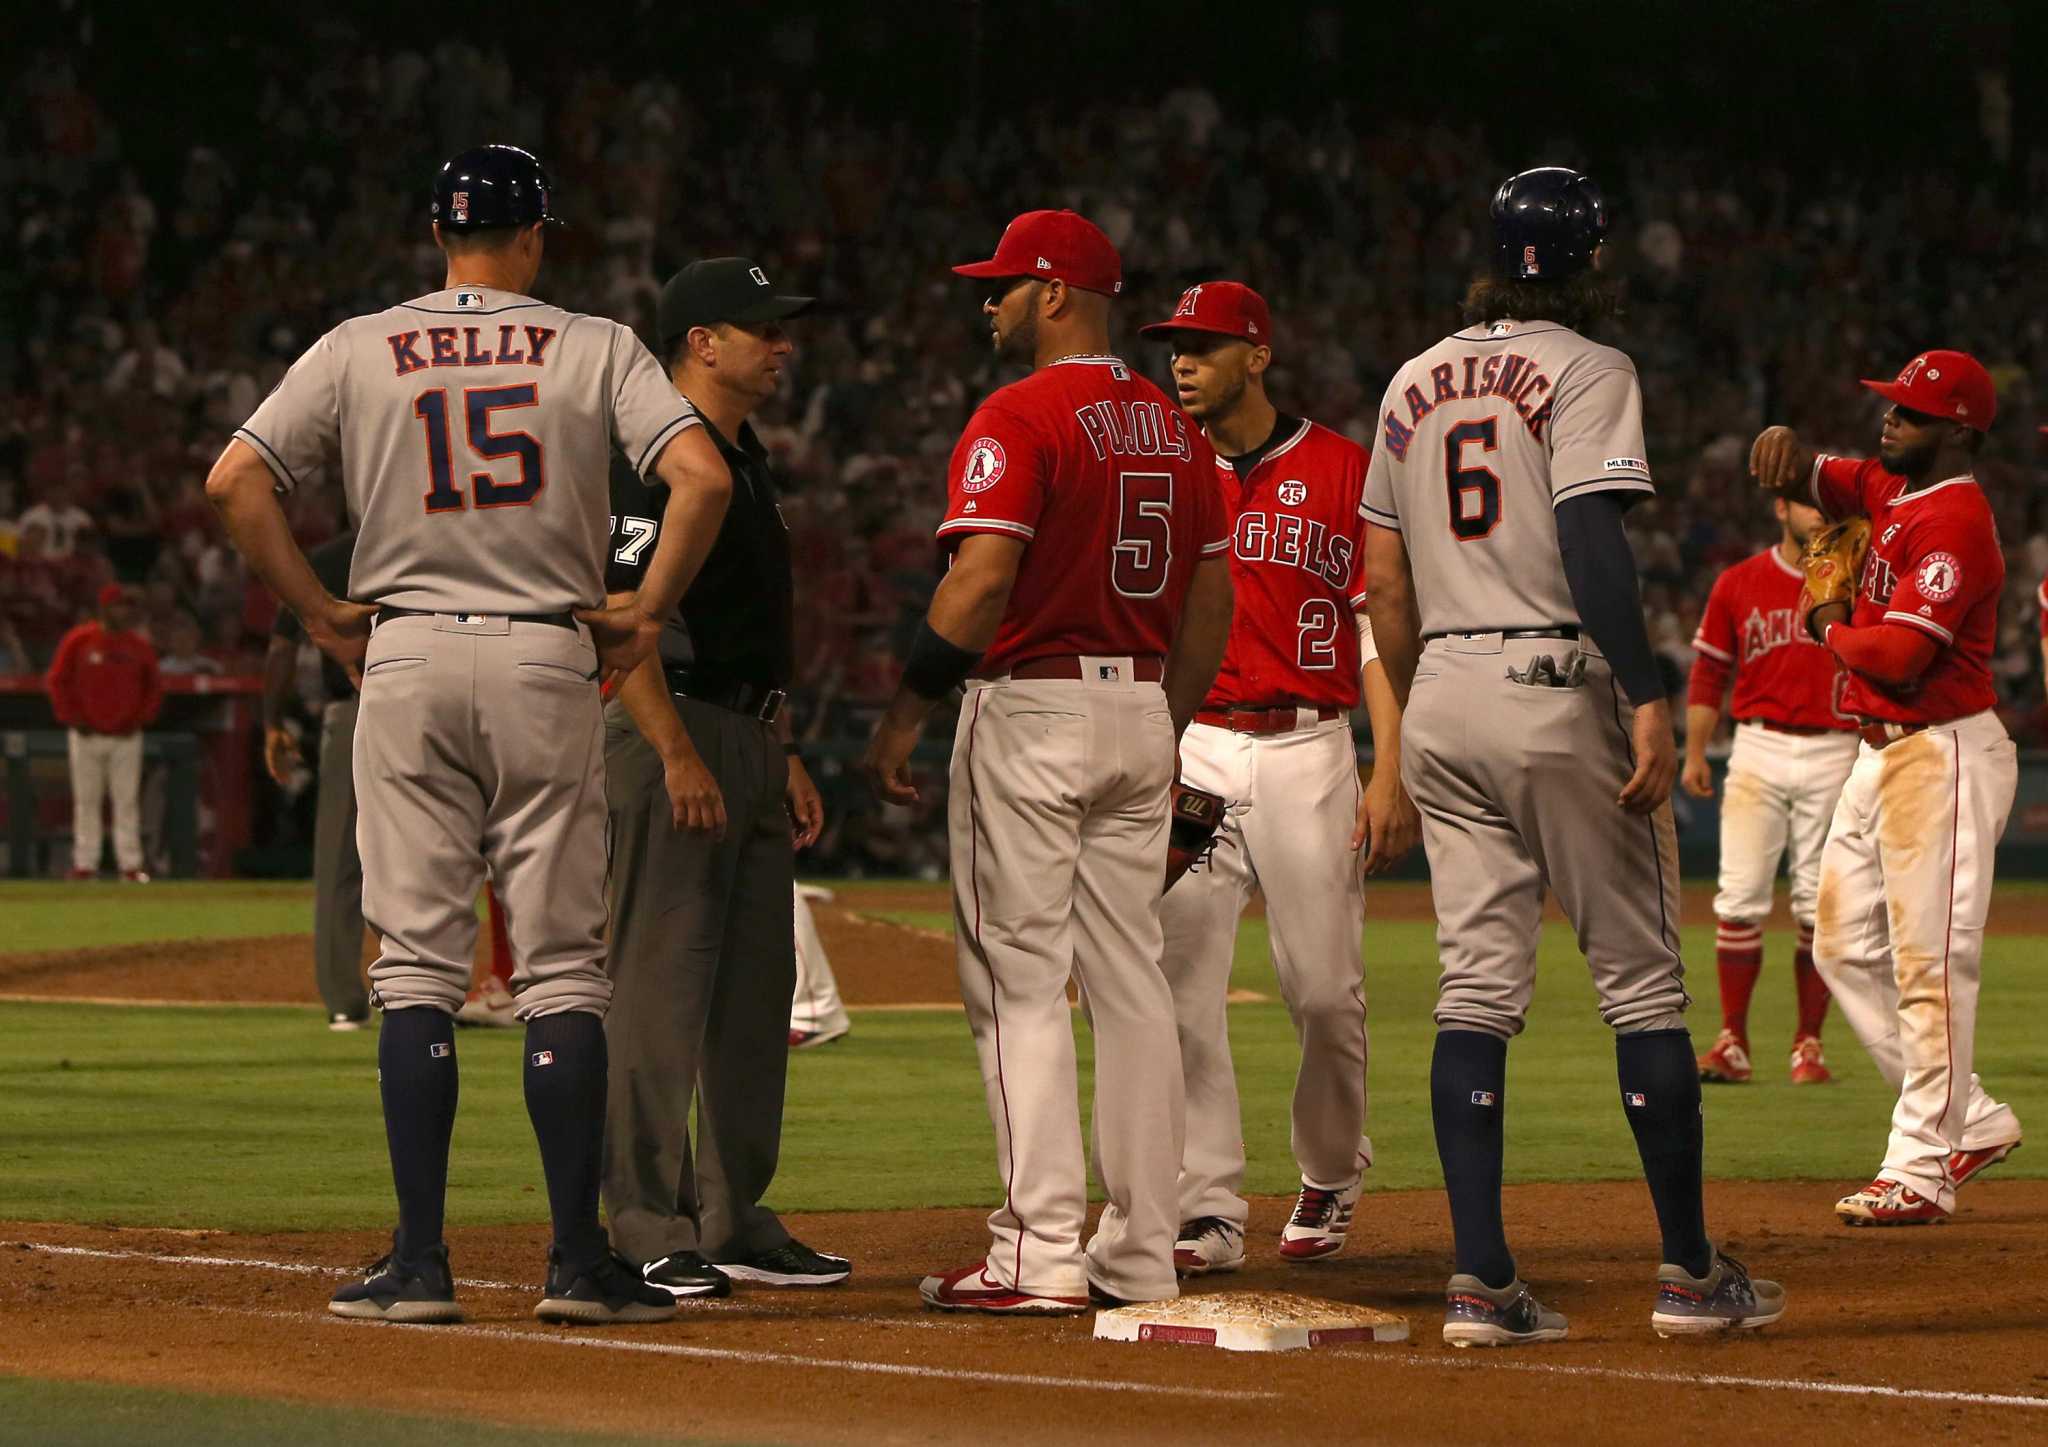 Angels' Ramirez, Ausmus suspended after Astros' Marisnick hit by pitch